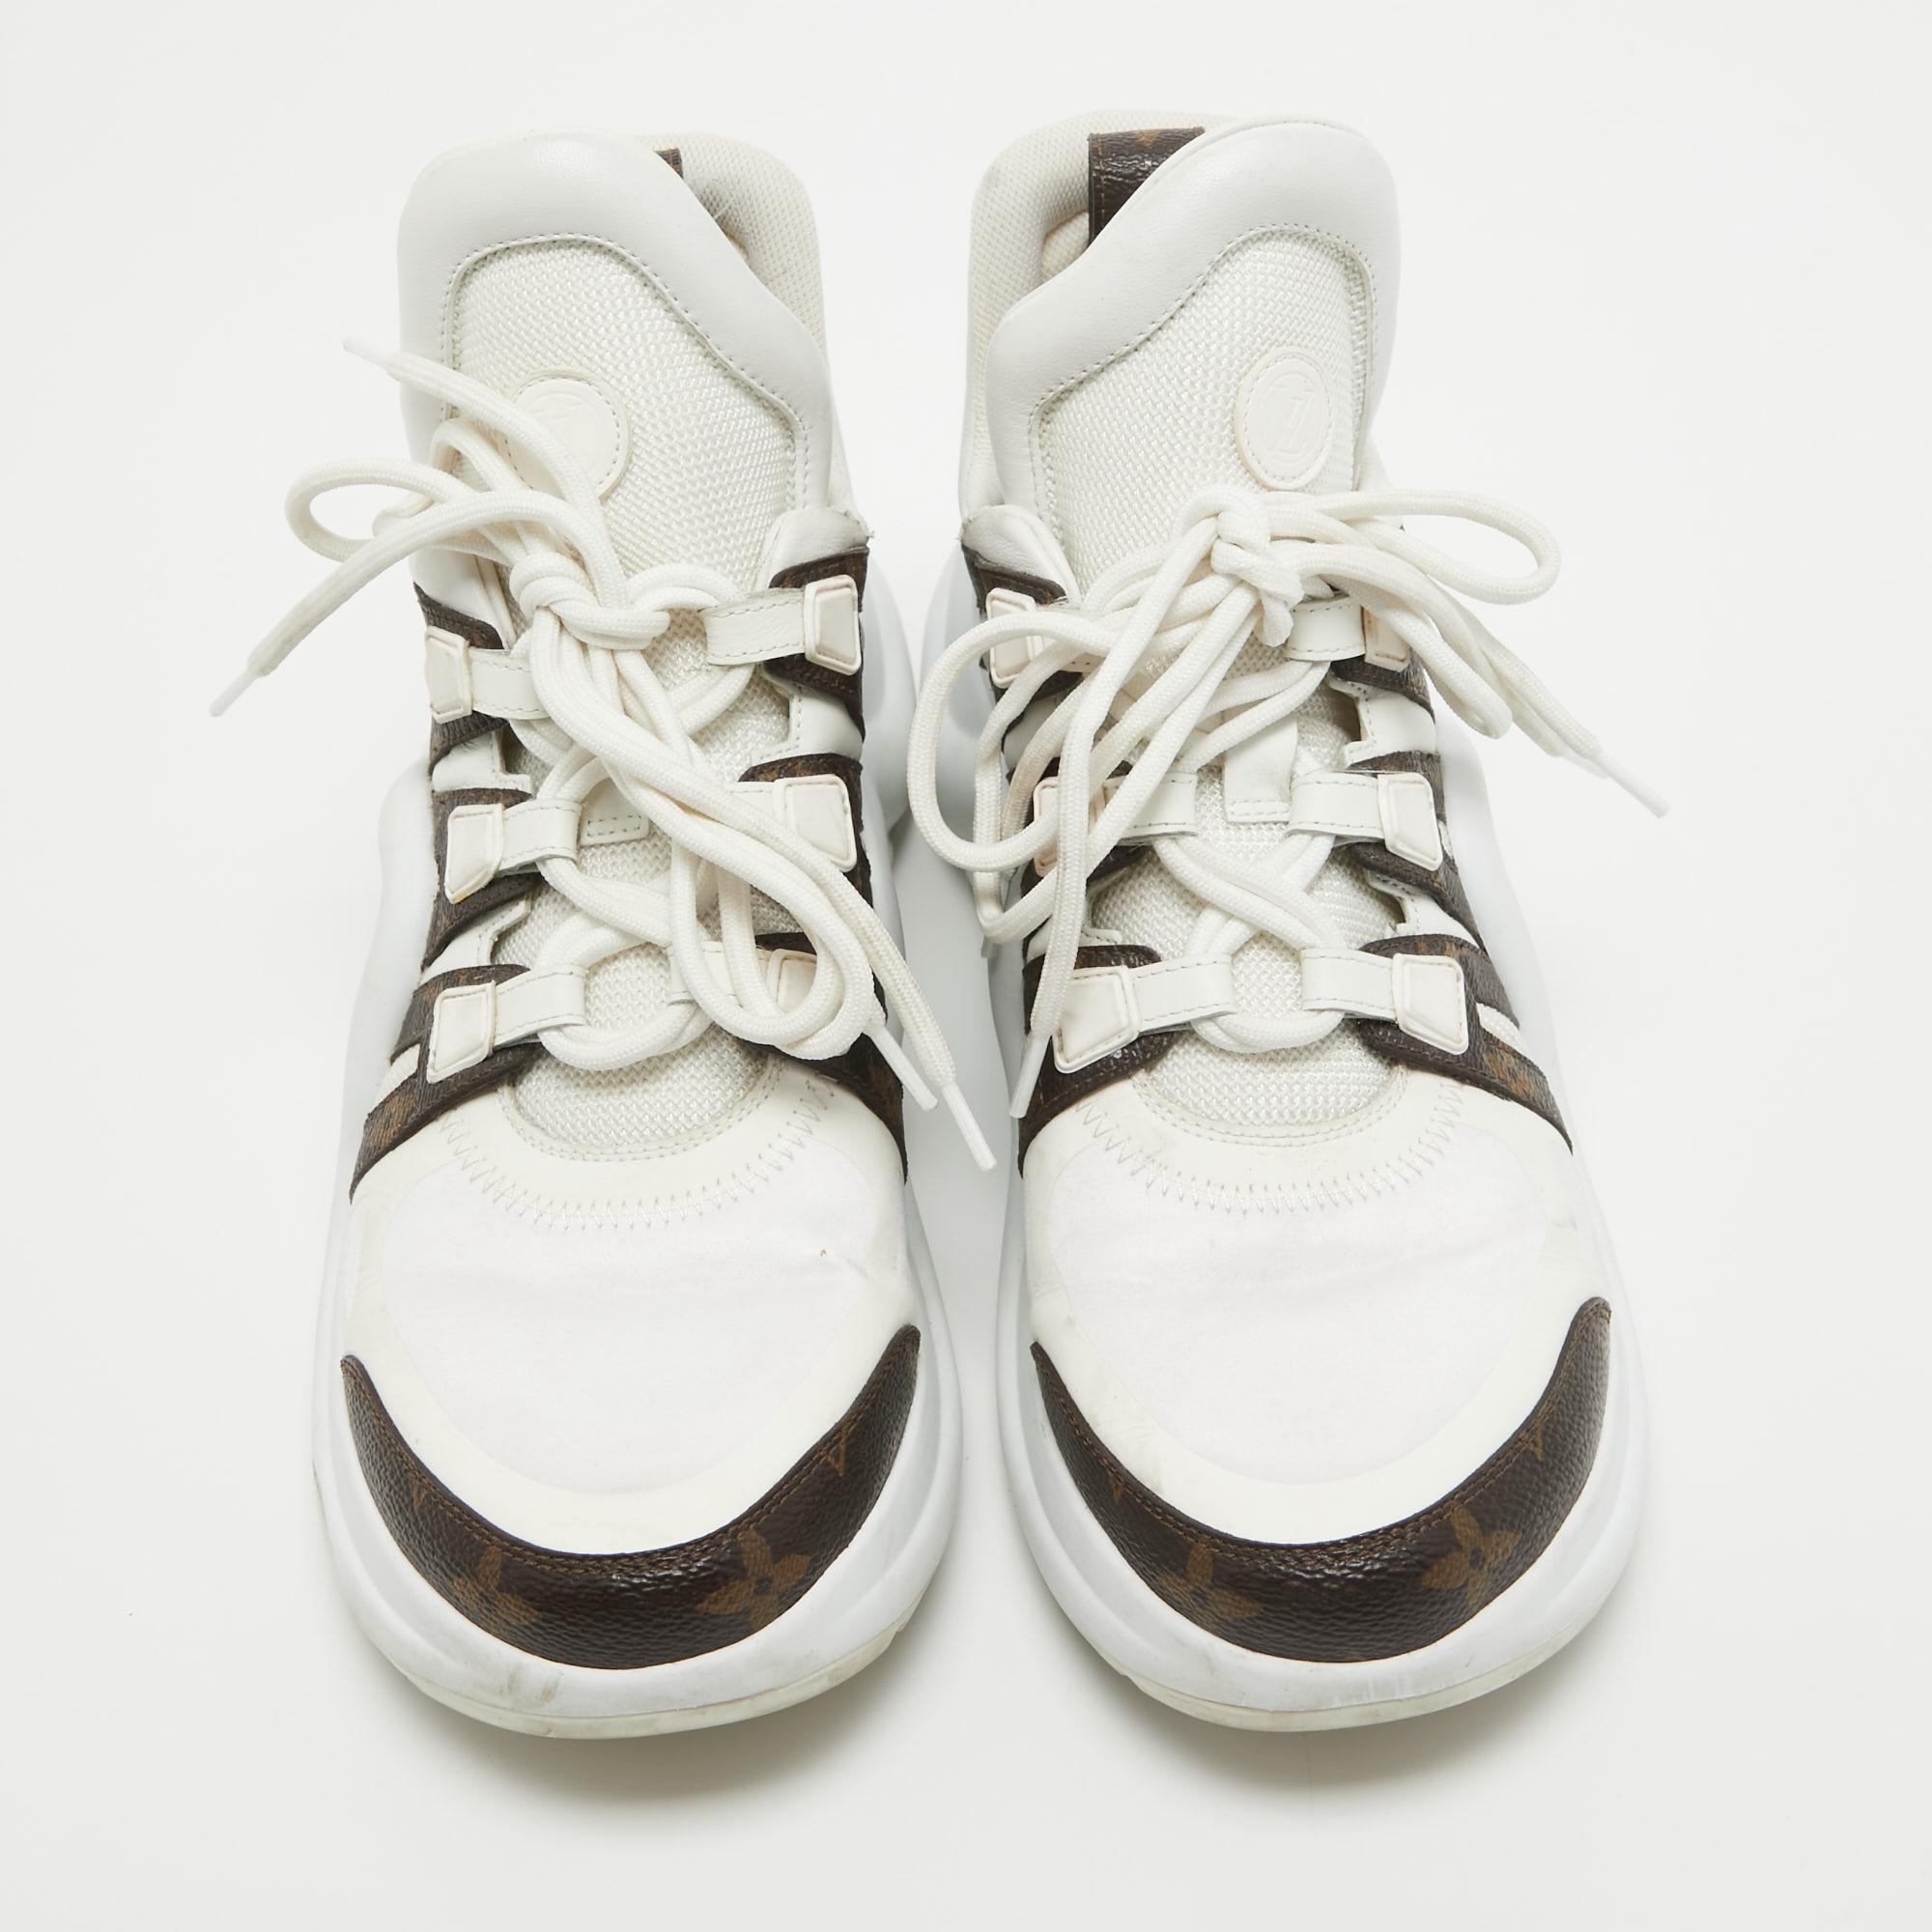 Women's Louis Vuitton White/Brown Nylon and Monogram Canvas Archlight Sneakers Size 41